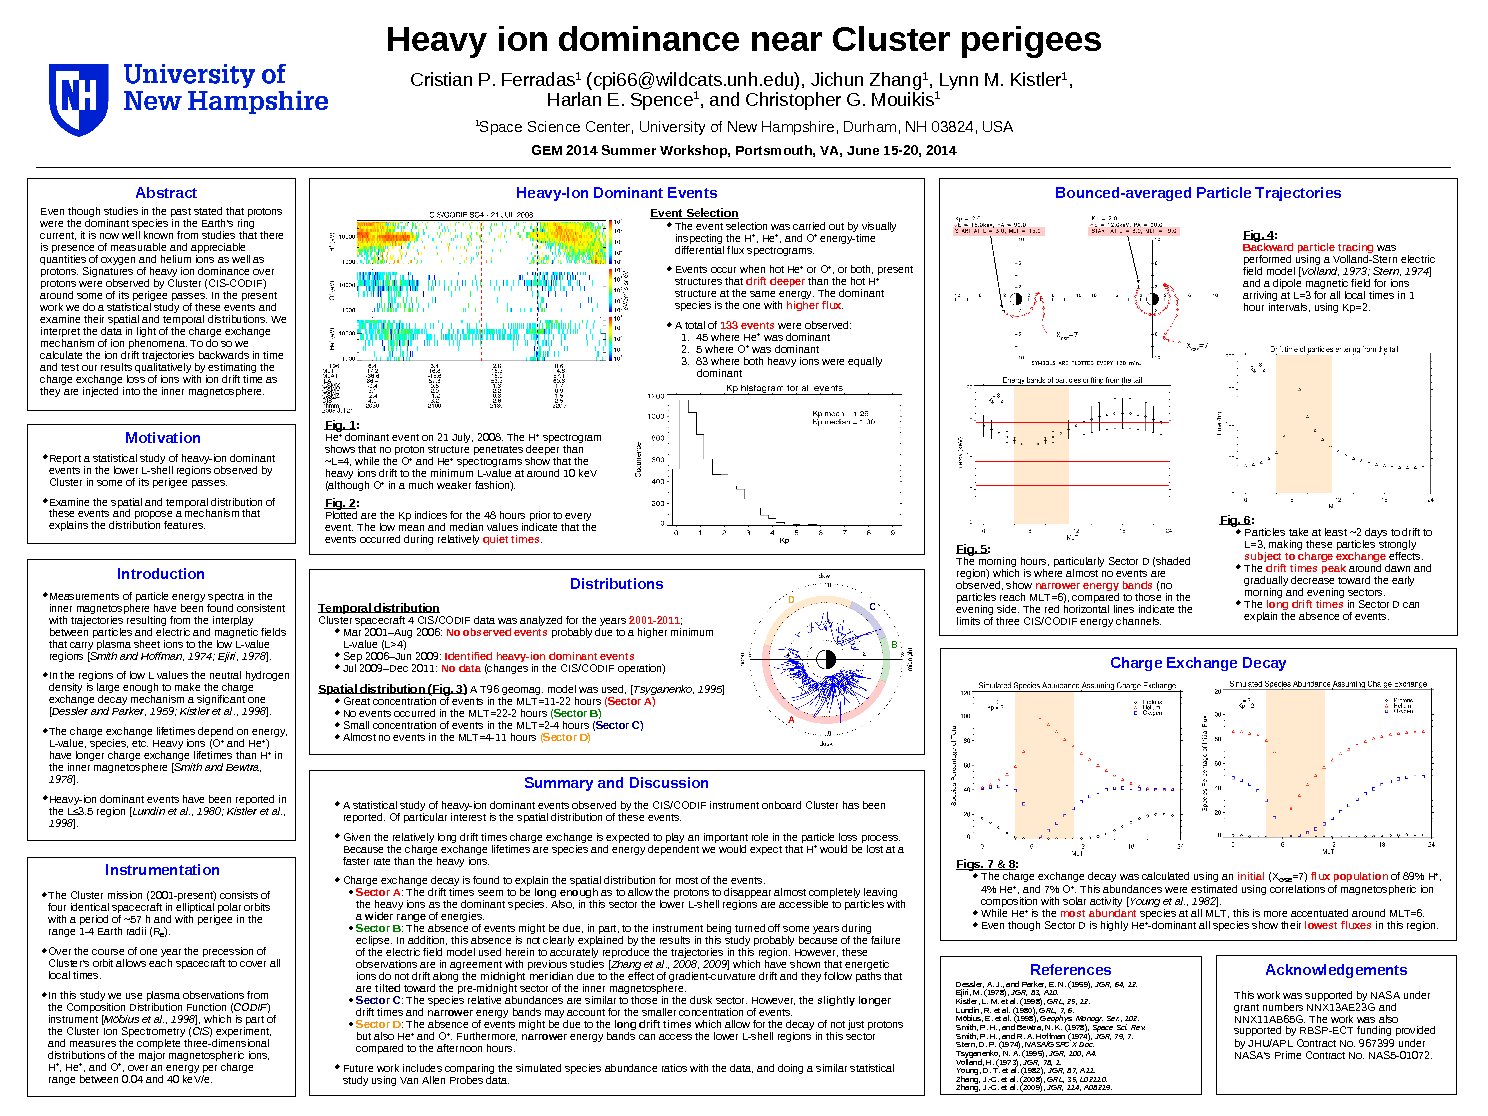 Heavy Ion Dominance Near Cluster Perigees by cferradas